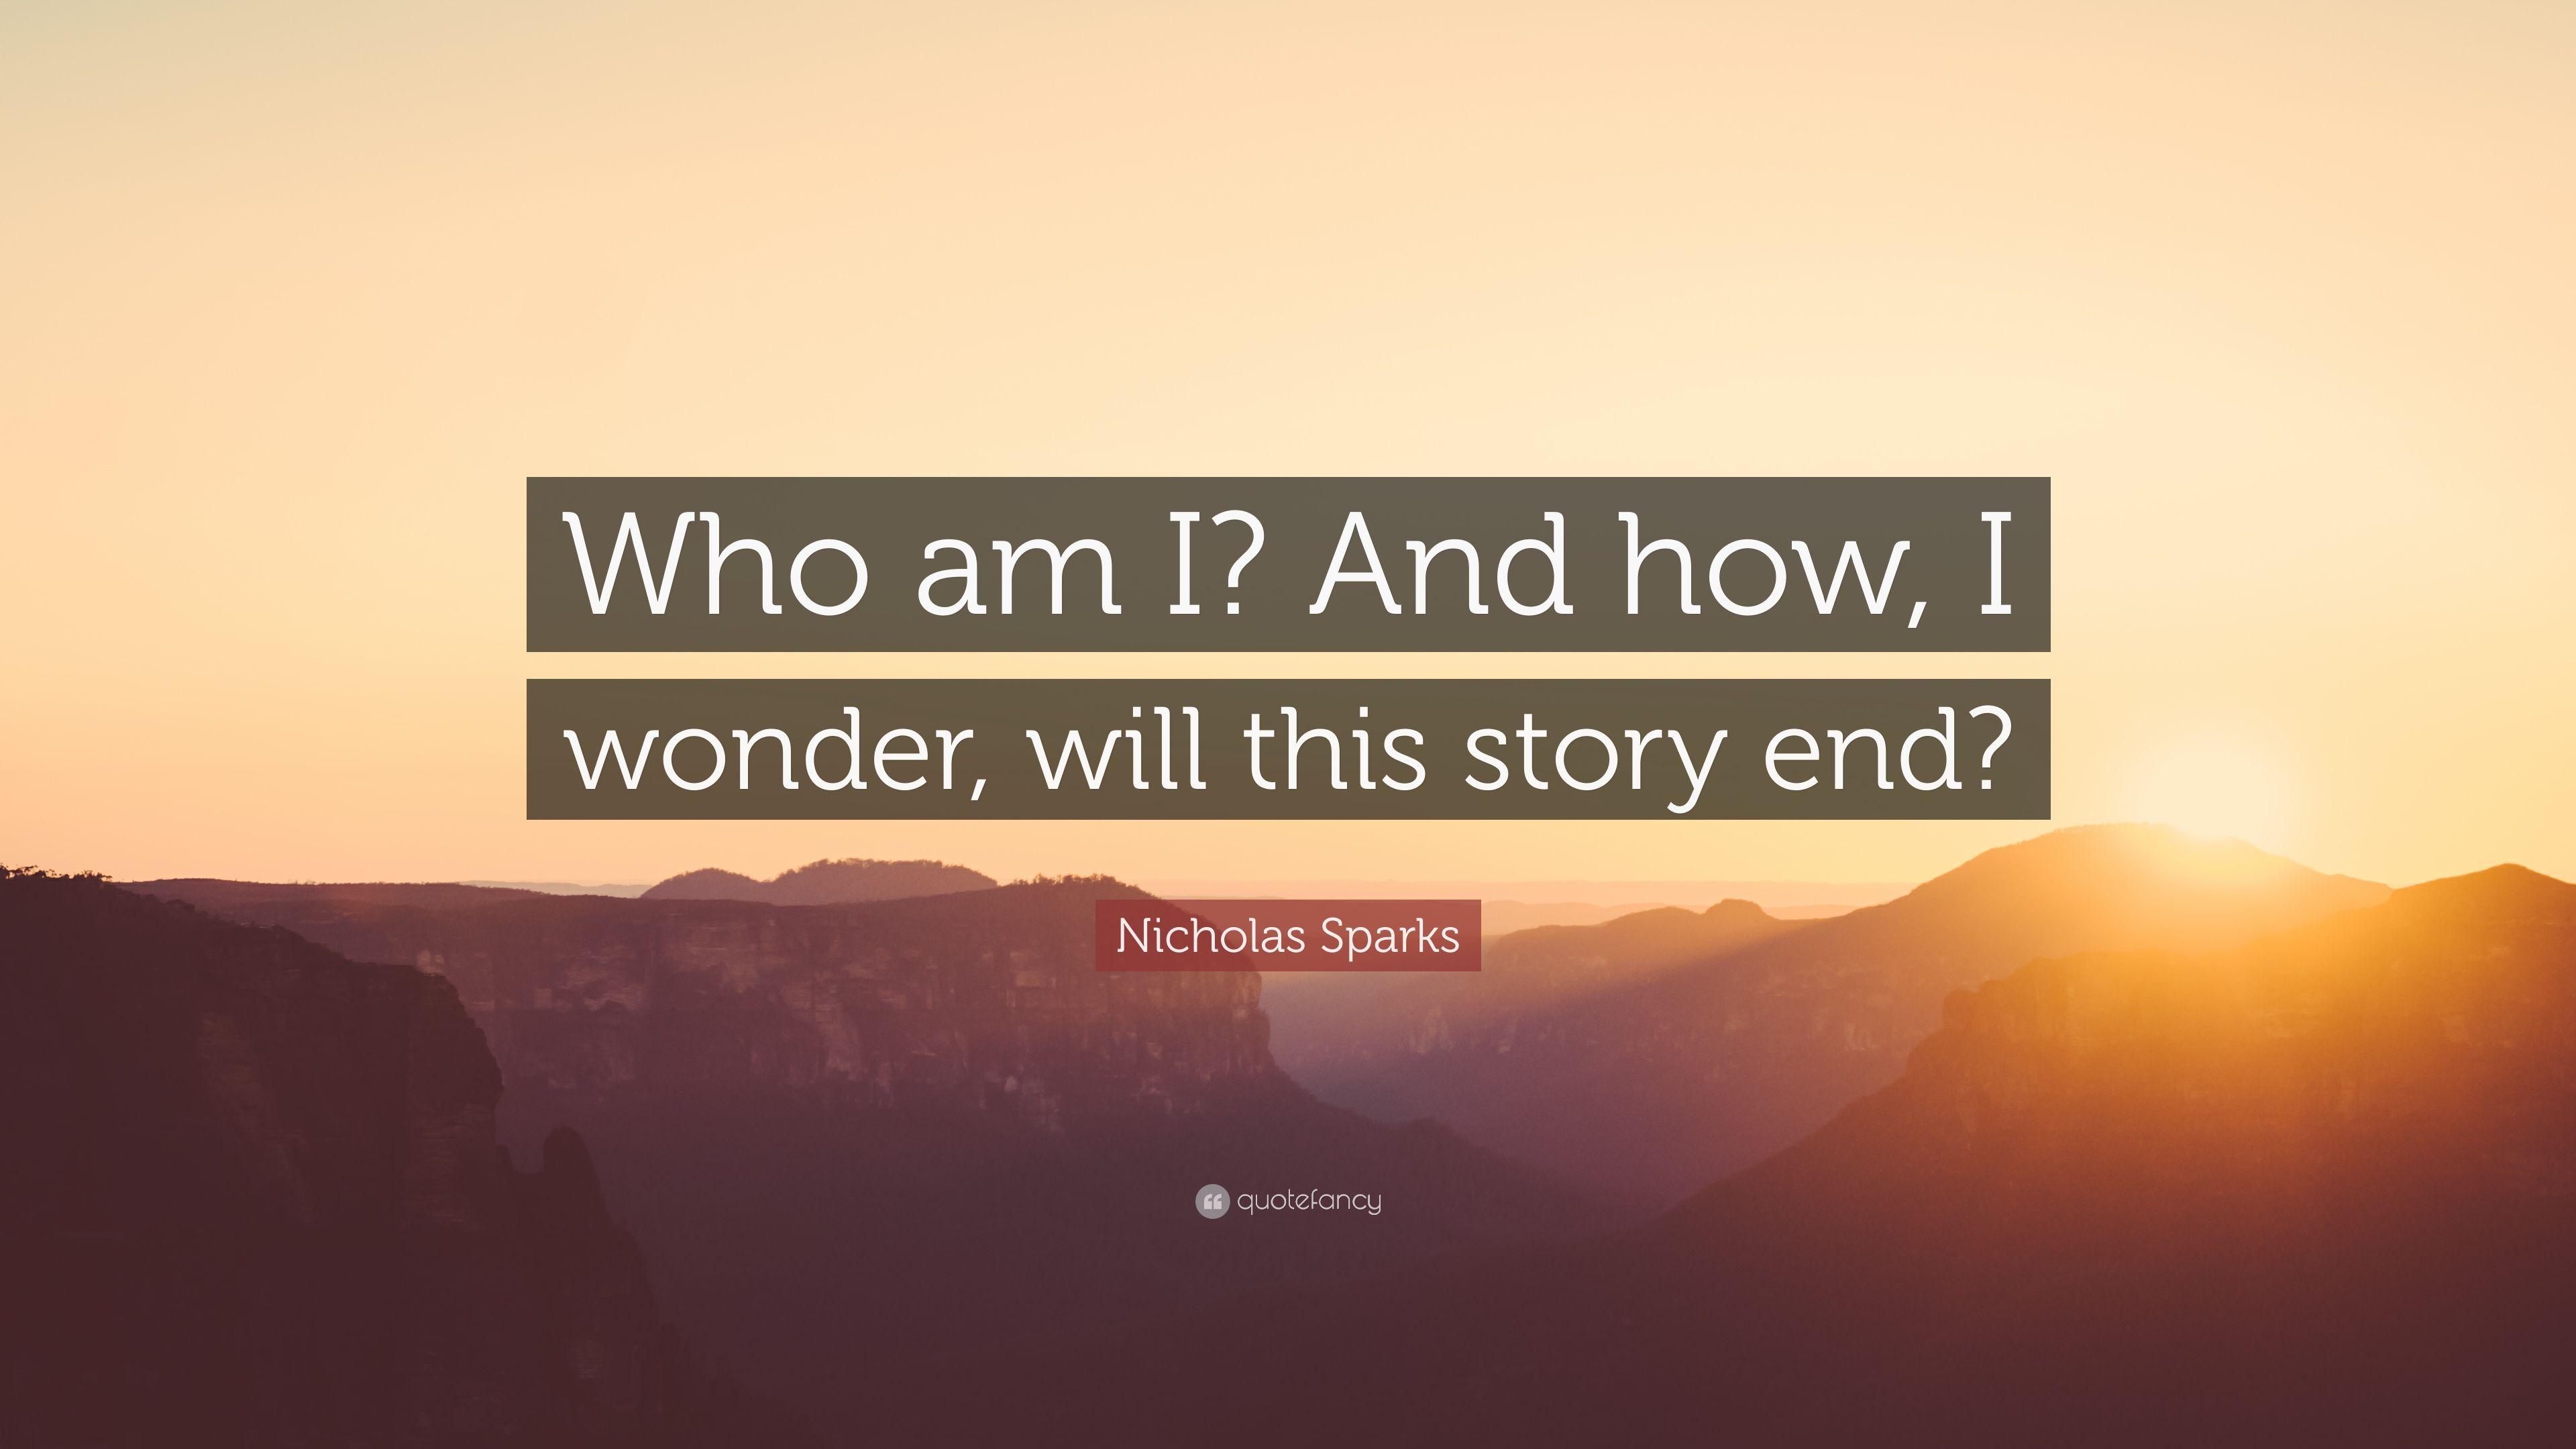 Nicholas Sparks Quote: "Who am I? 